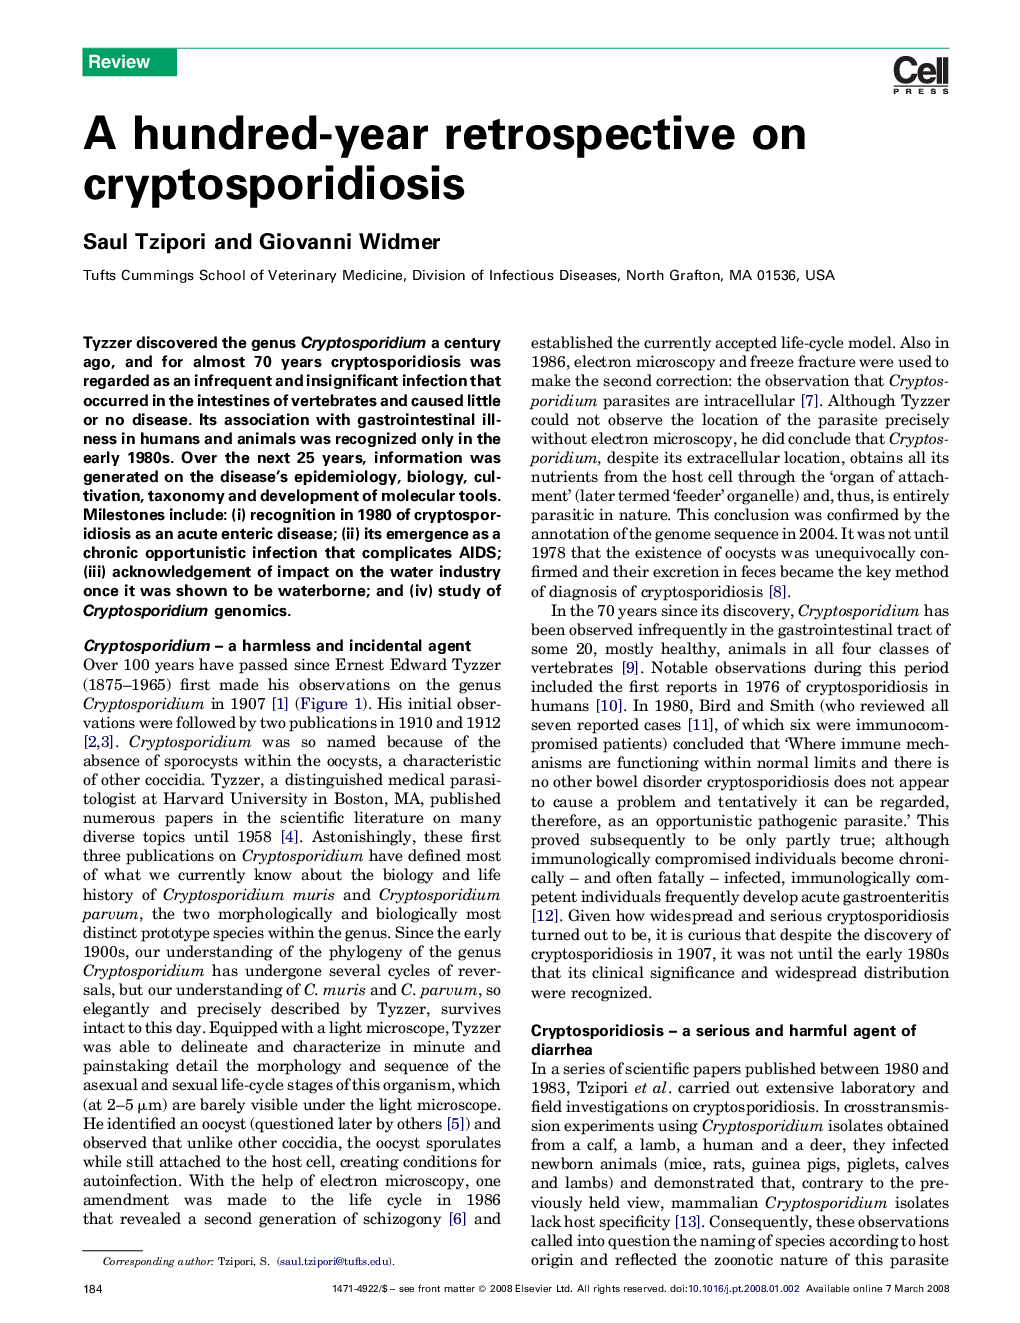 A hundred-year retrospective on cryptosporidiosis